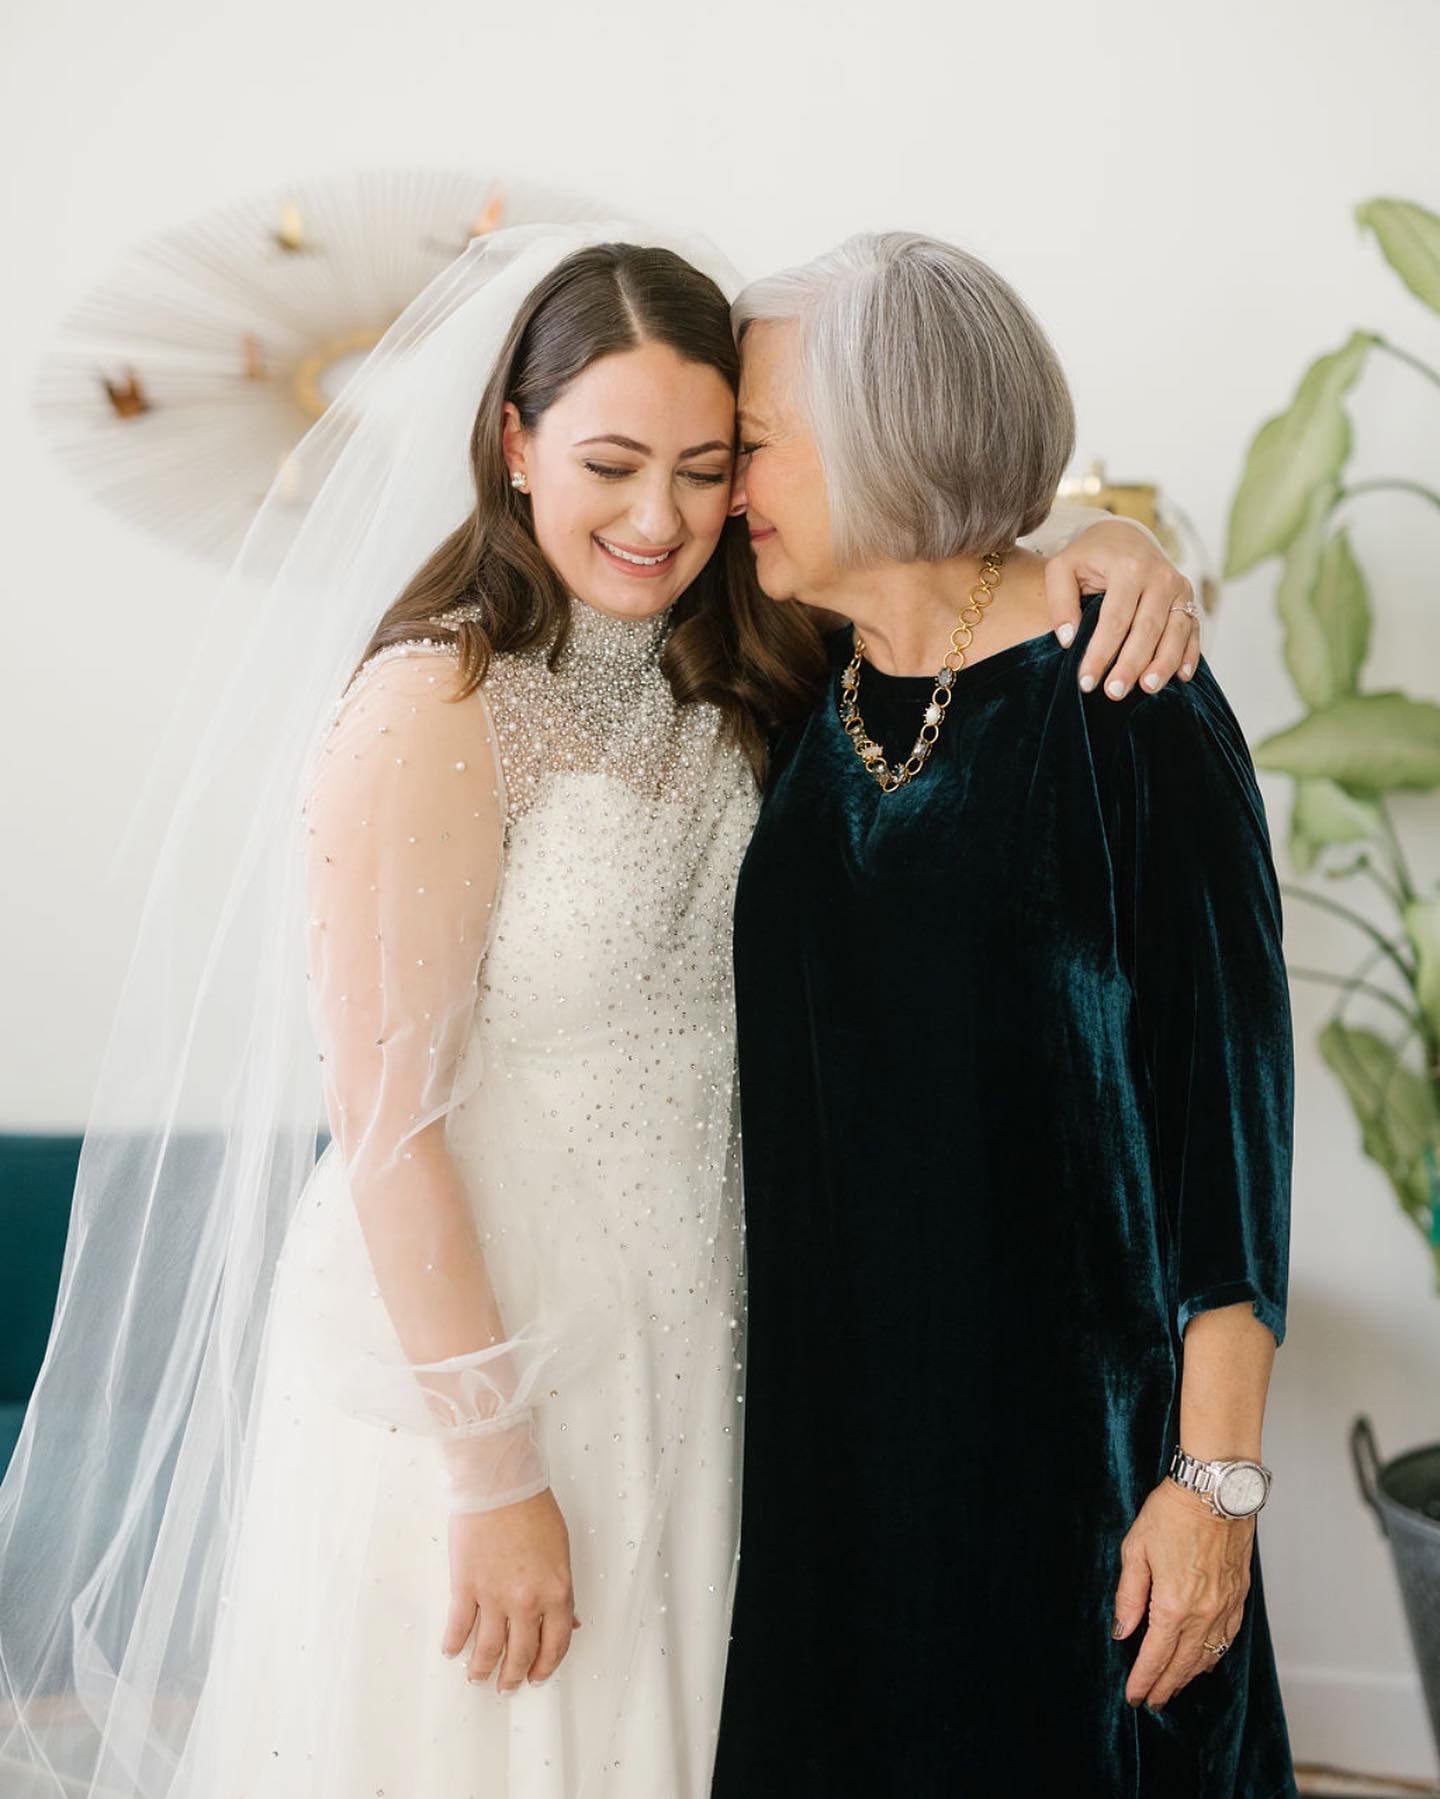 mom and grandma on wedding day with bride wearing Grandma's upcycled wedding veil